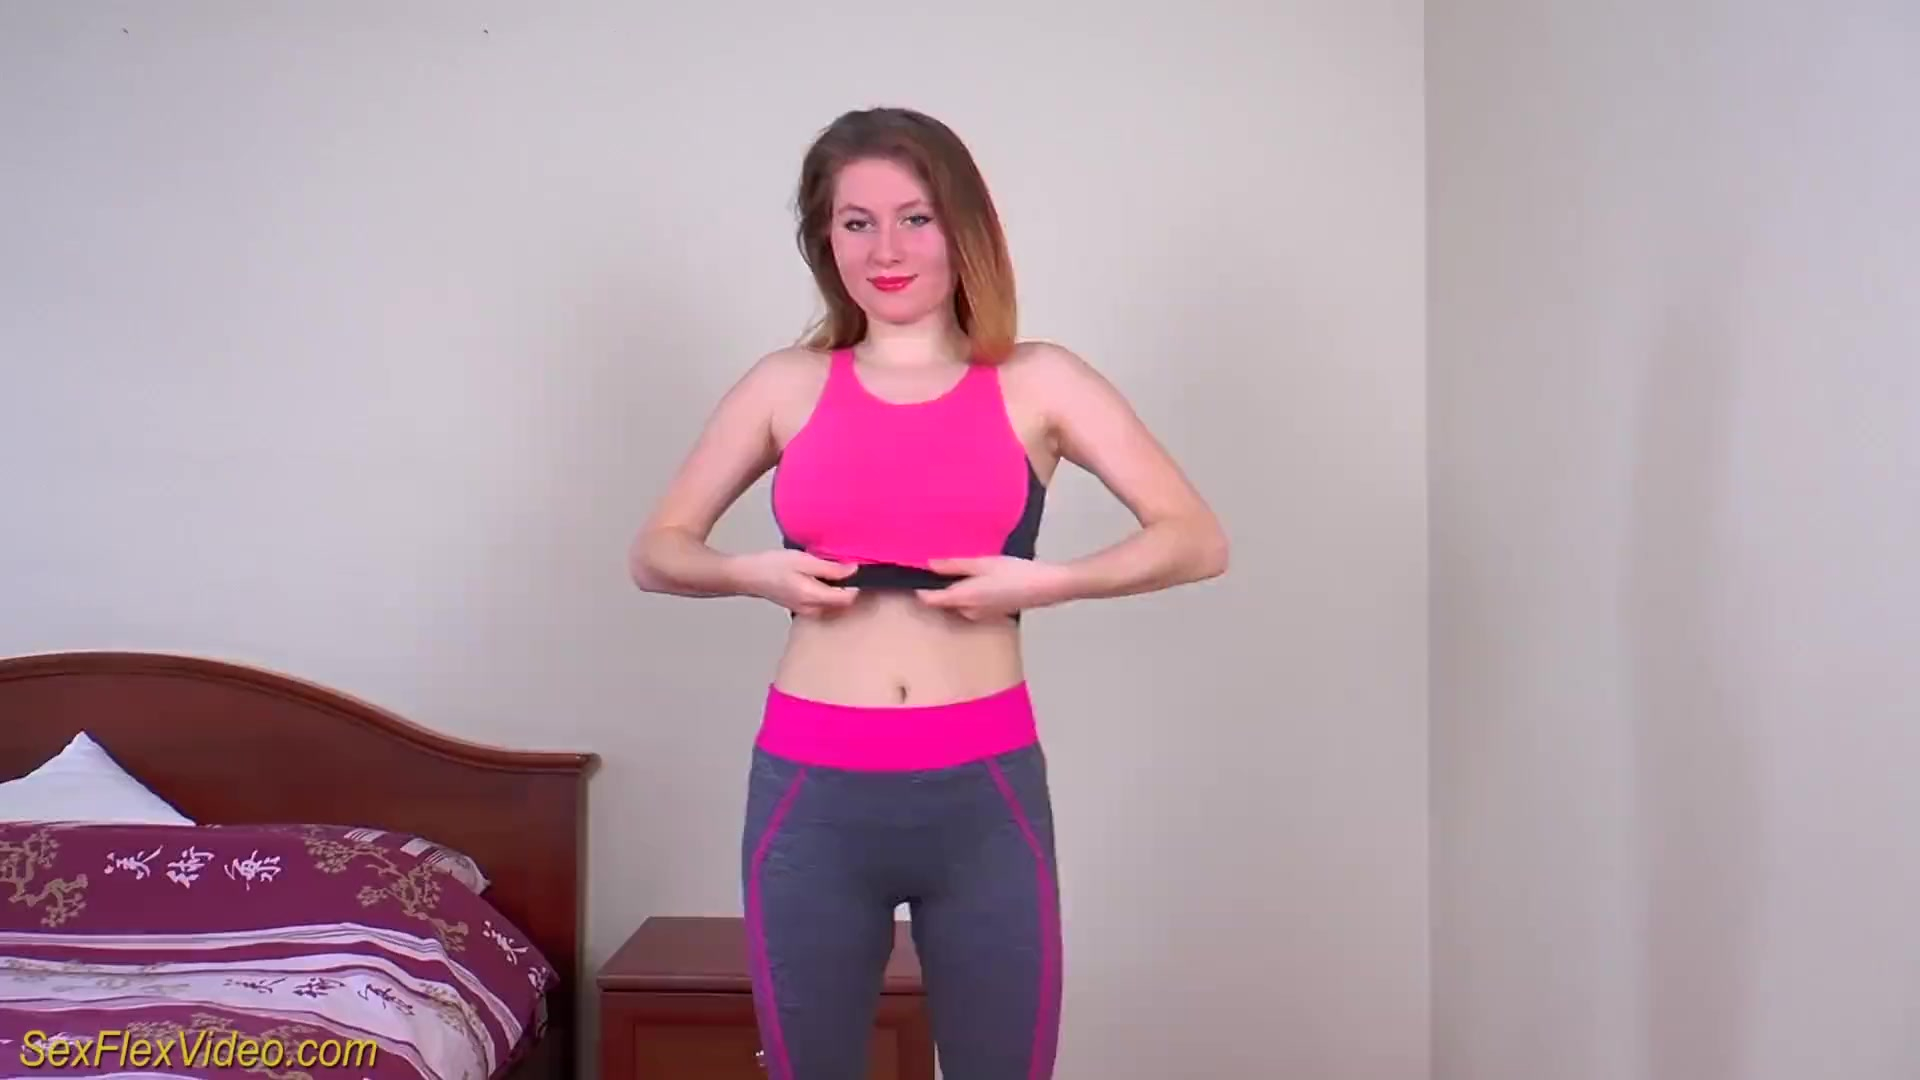 flexi redhead teen shows her limber body